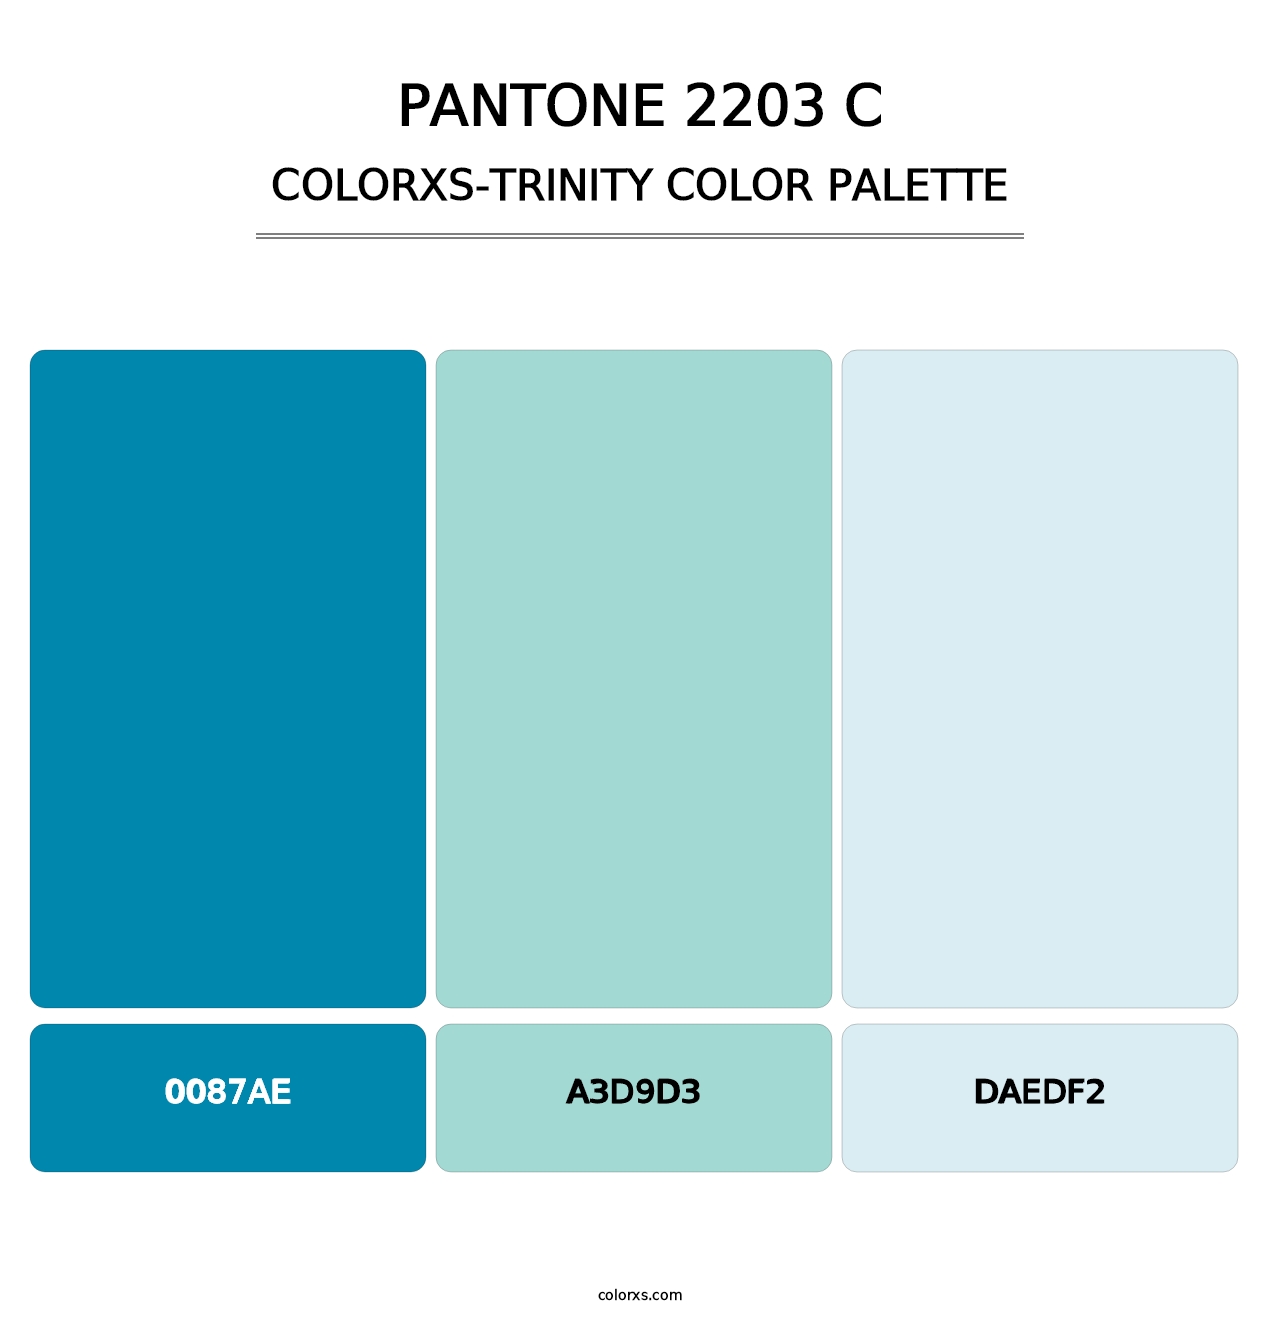 PANTONE 2203 C - Colorxs Trinity Palette